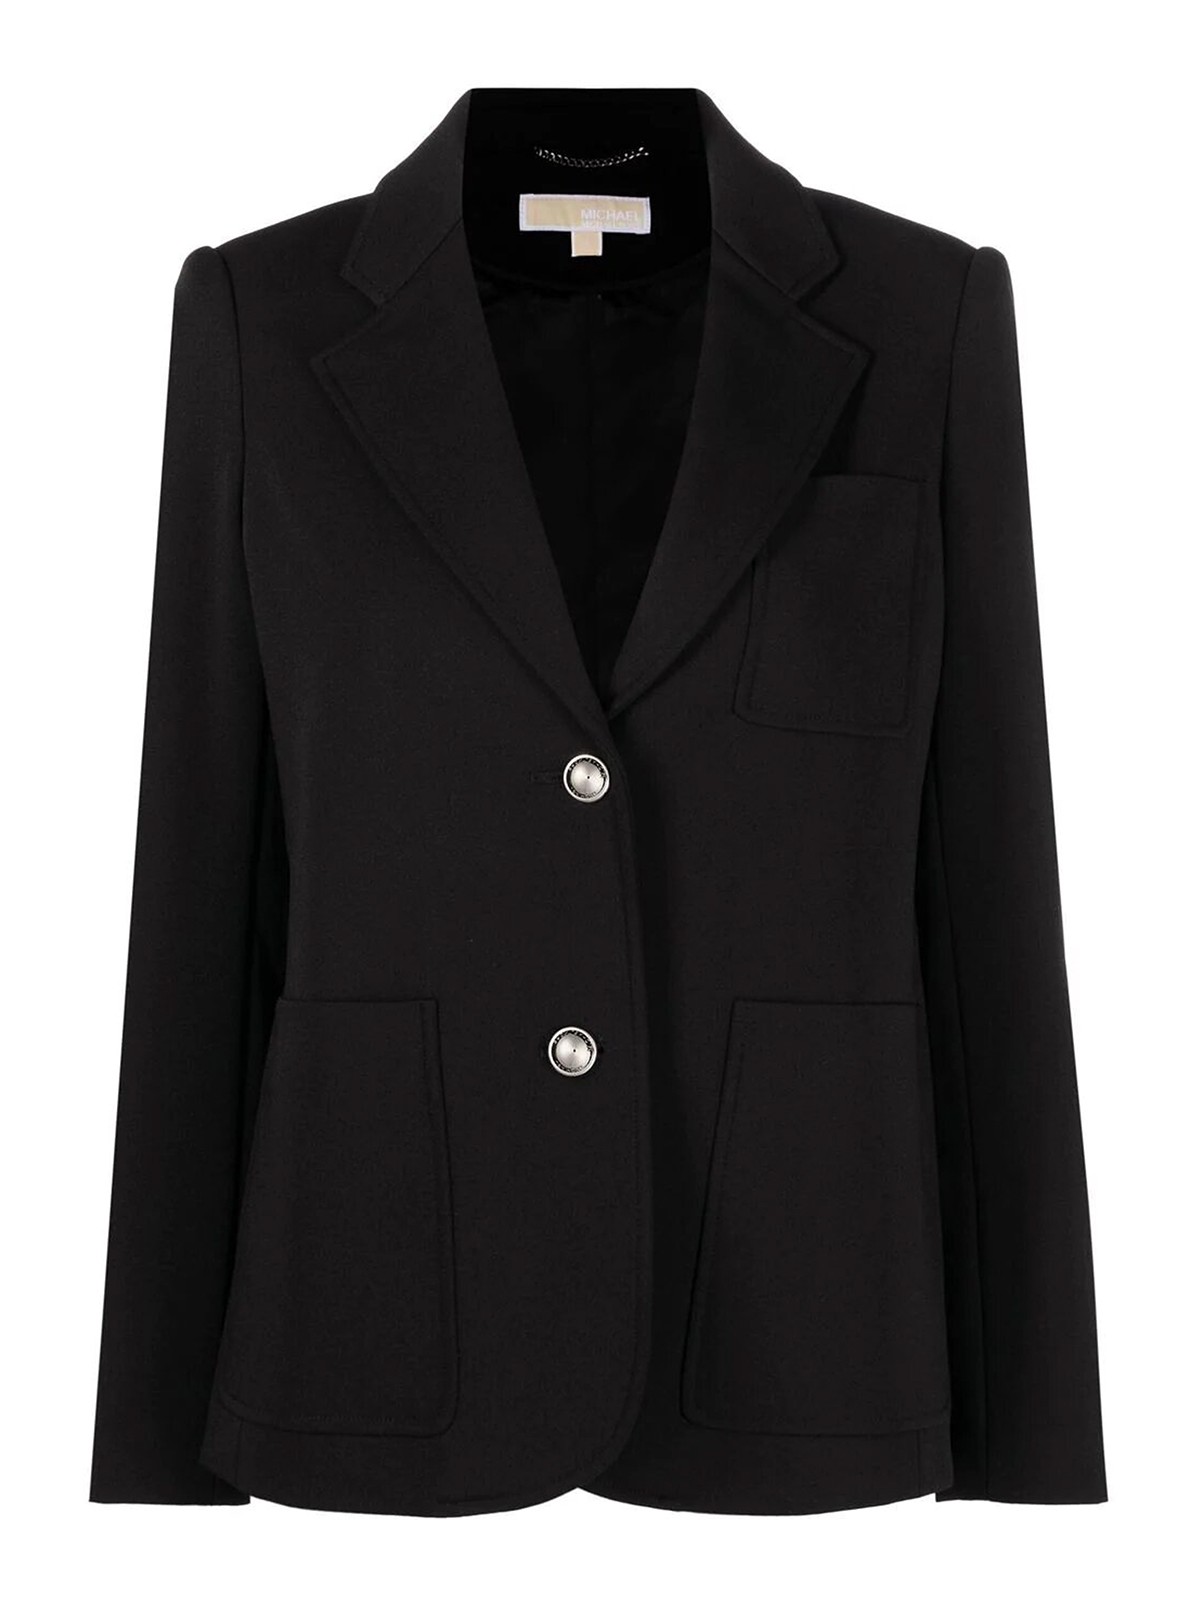 Michael Kors Blazer Jacket In Black